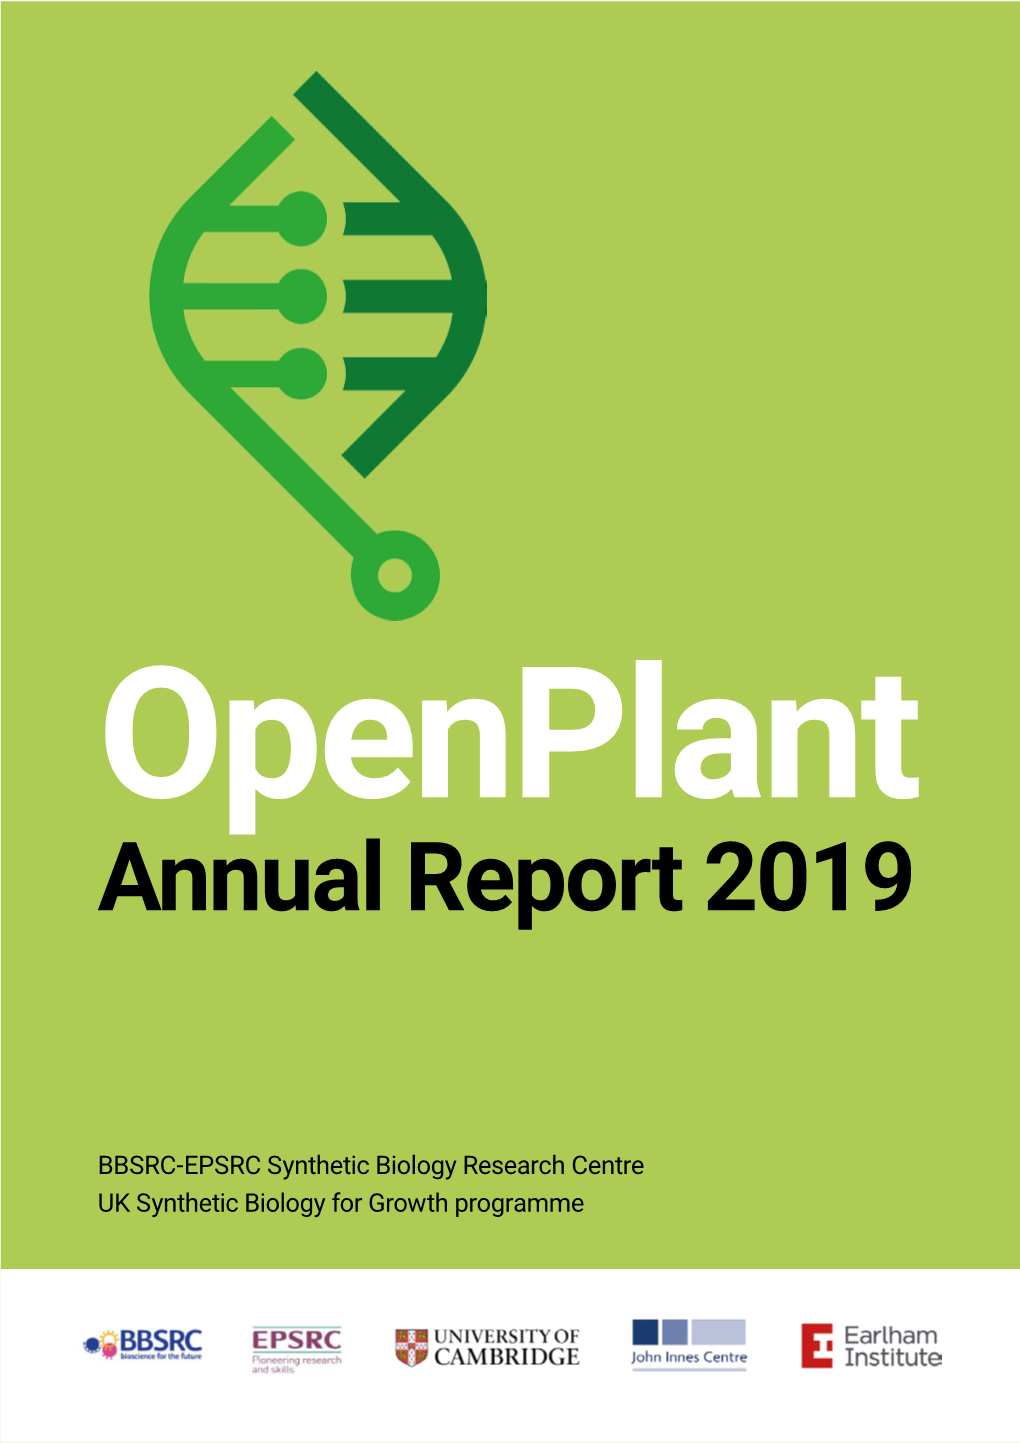 Annual Report 2019 Executive Summary